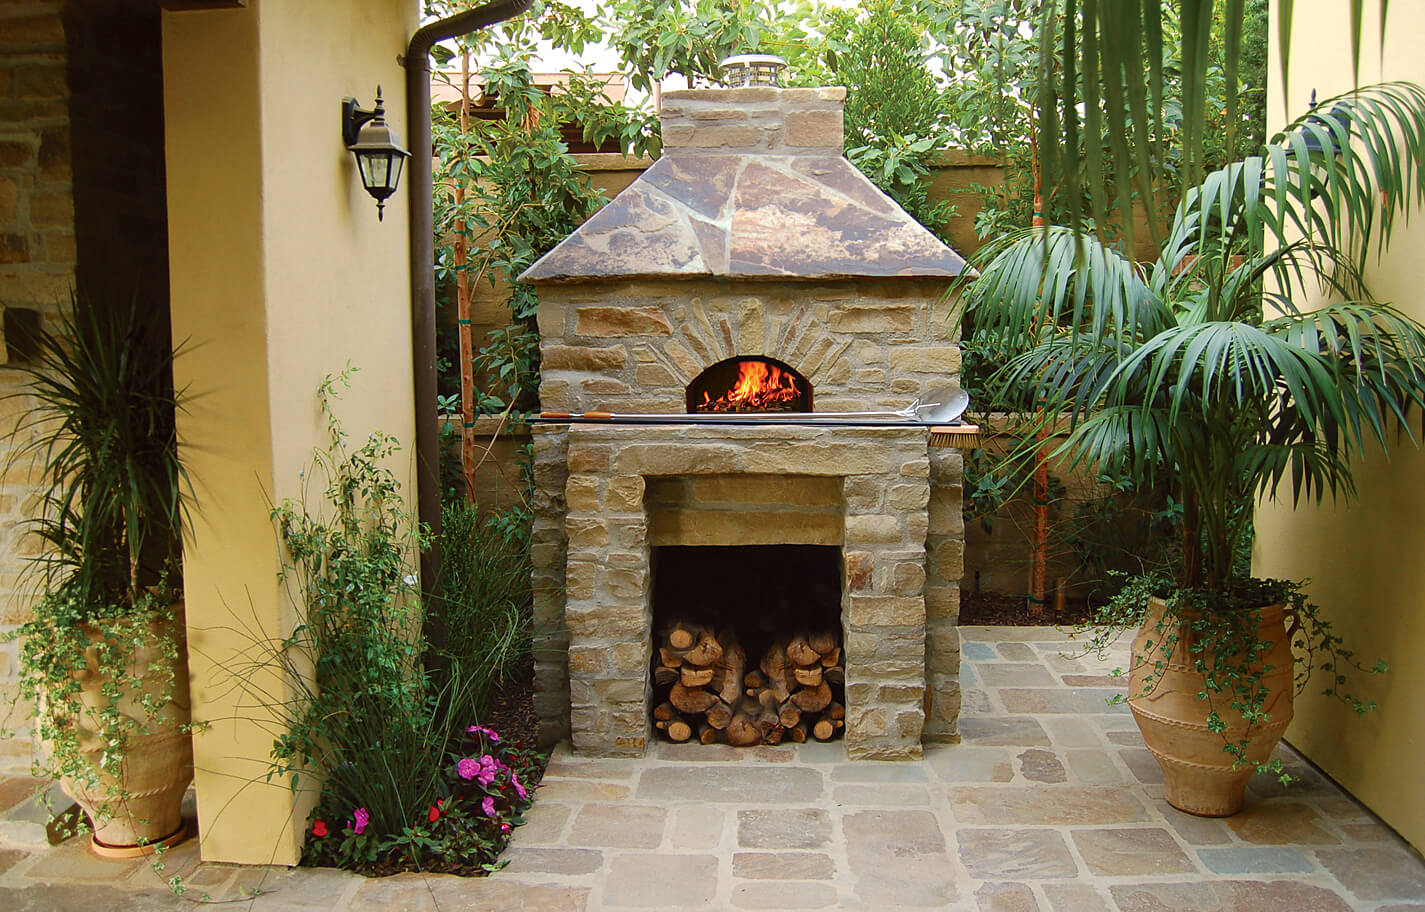 Mugnaini oven in an outdoor setting